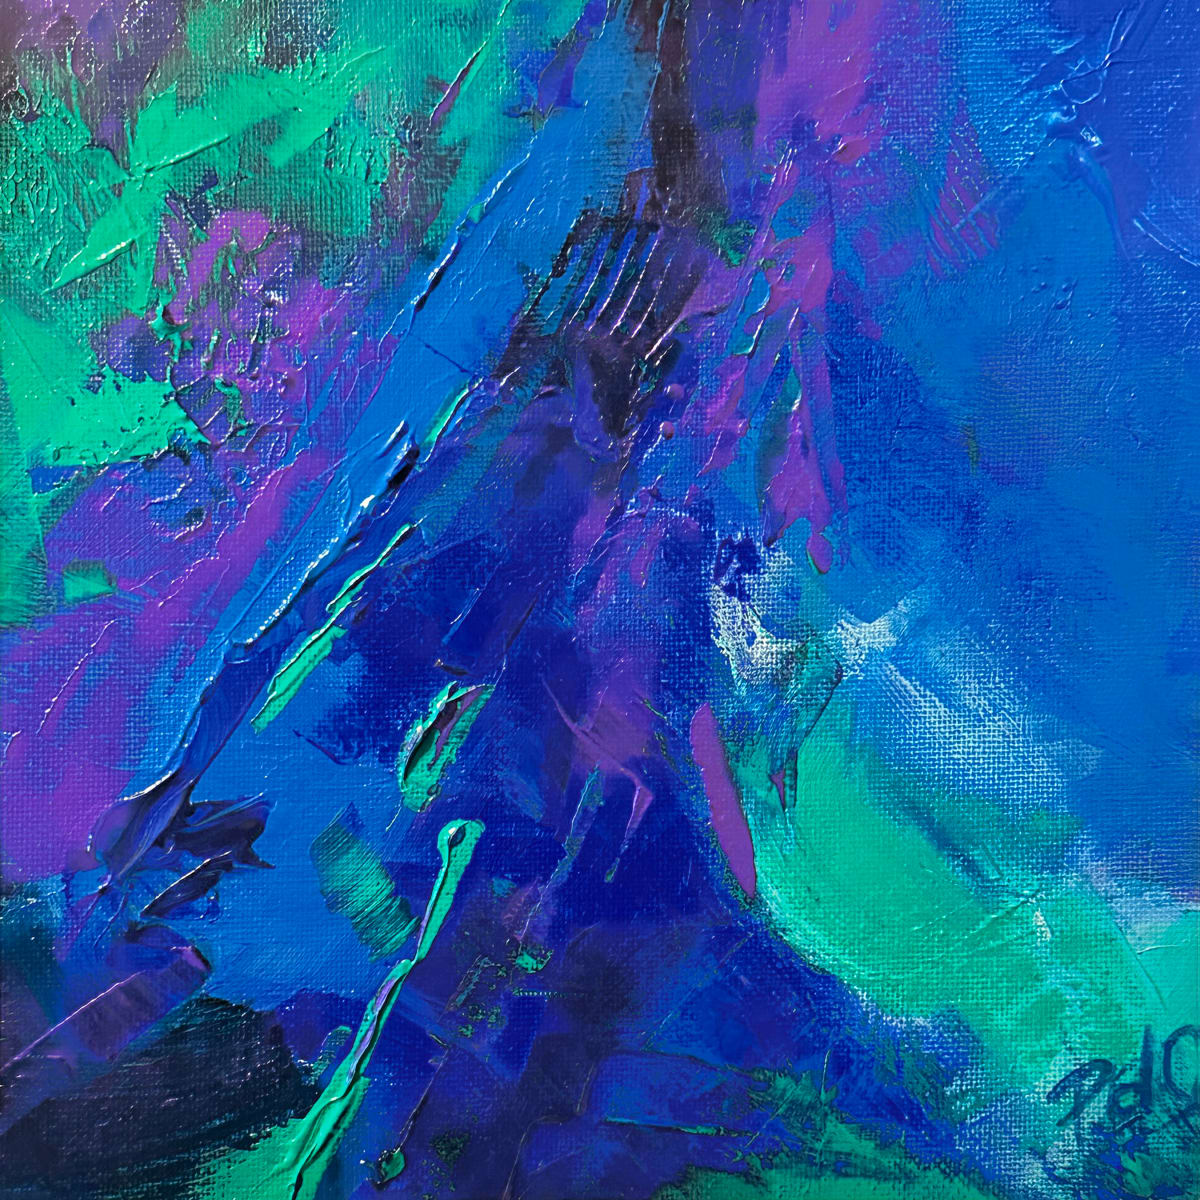 Deep Blue Sea II by Phyllis Mantik deQuevedo  Image: 10 x 10 - Acrylic on Canvas Board